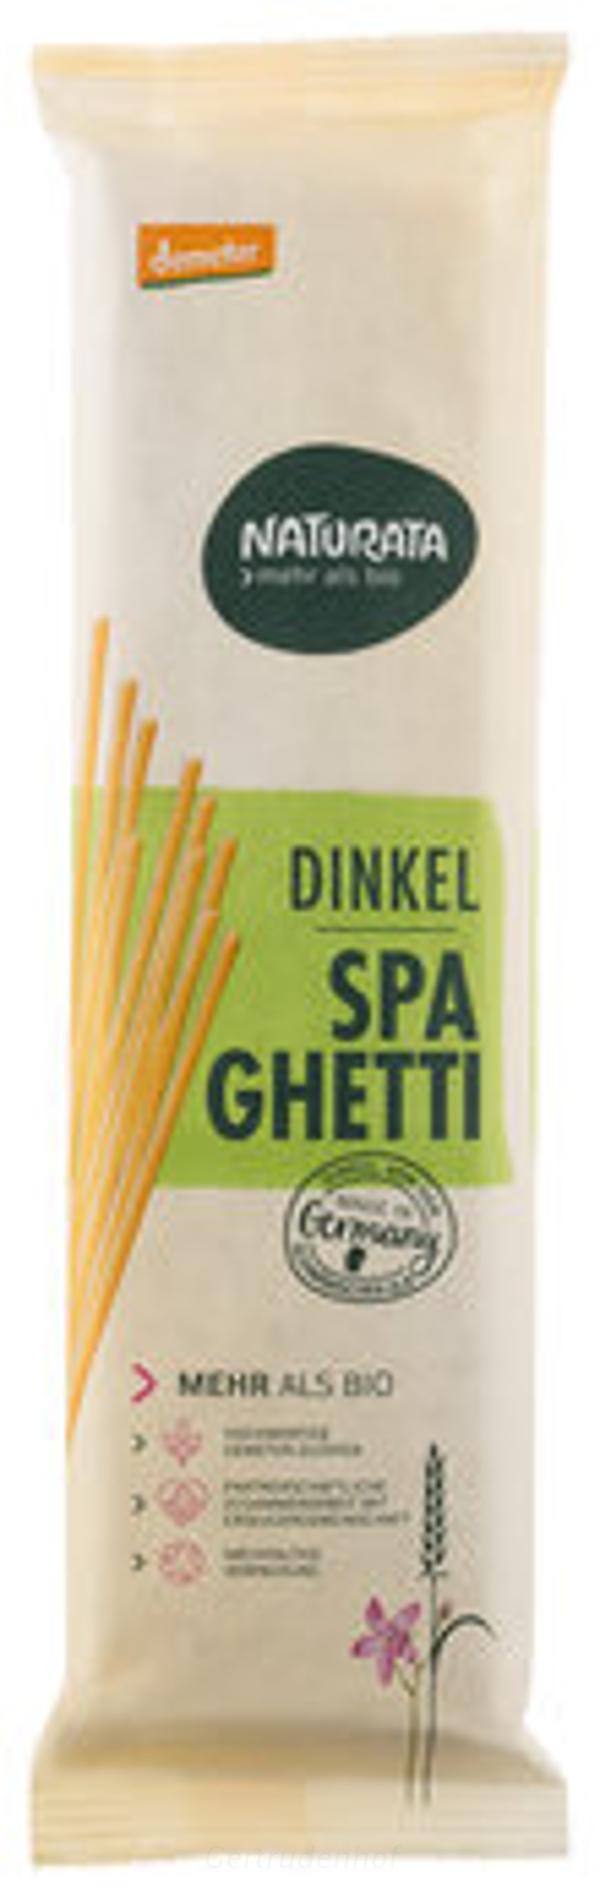 Produktfoto zu Dinkel Spaghetti hell NAT